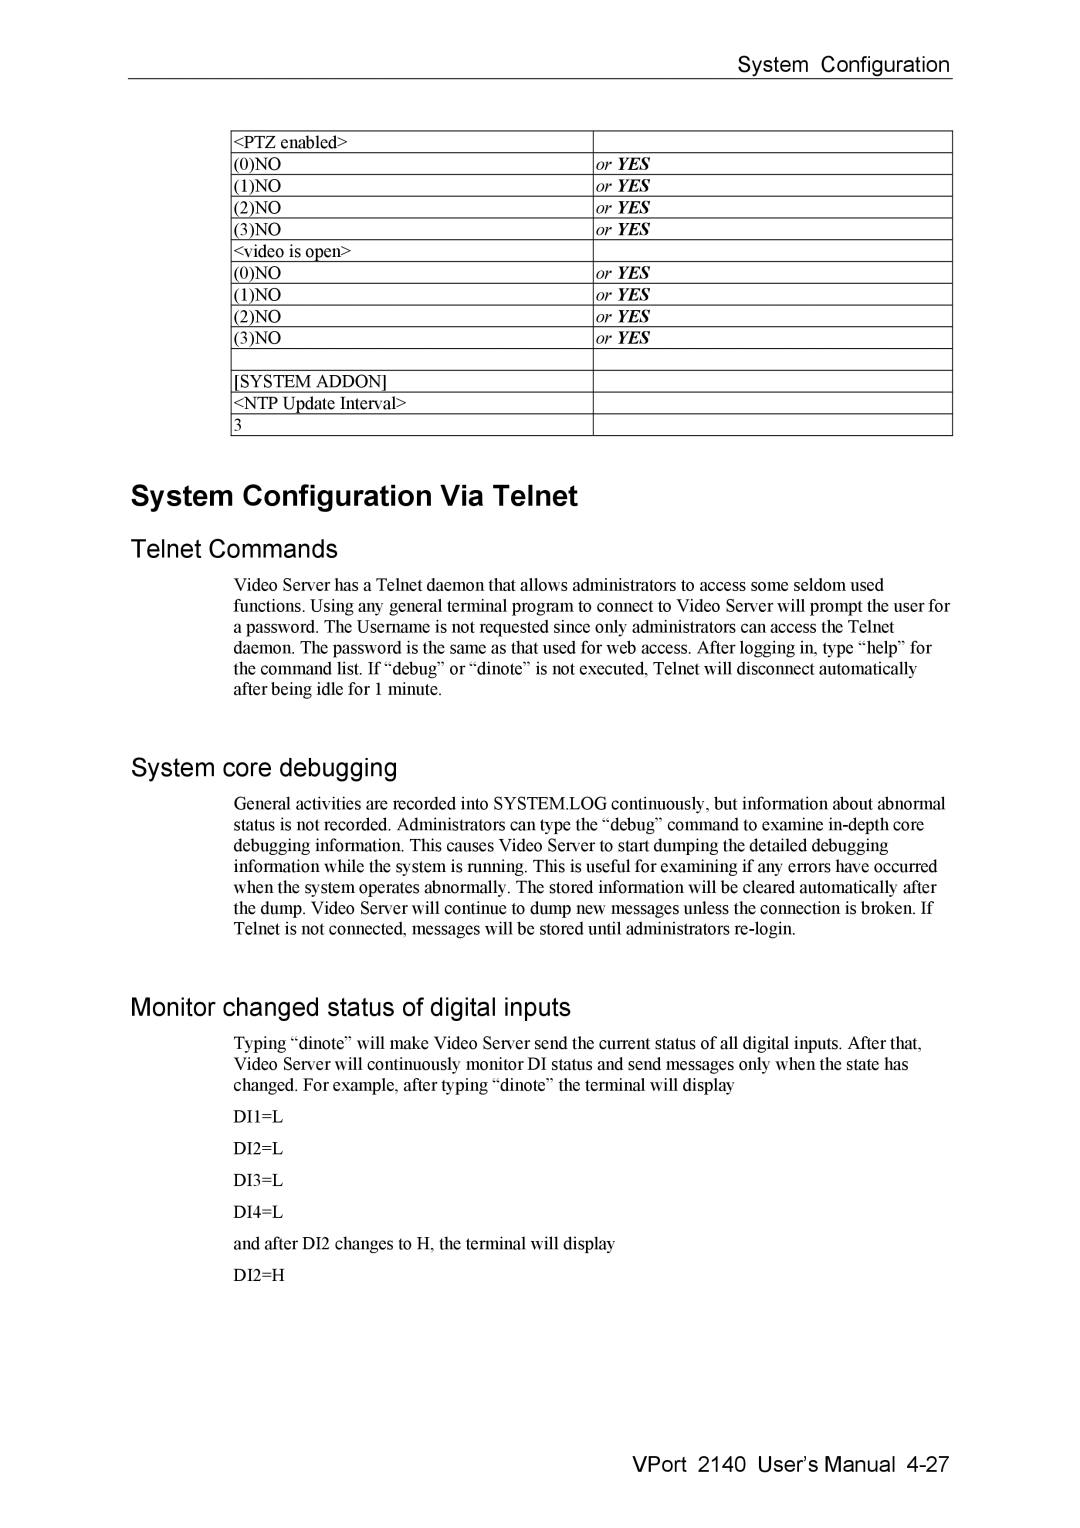 Moxa Technologies 2140 user manual System Configuration Via Telnet, Telnet Commands, System core debugging 